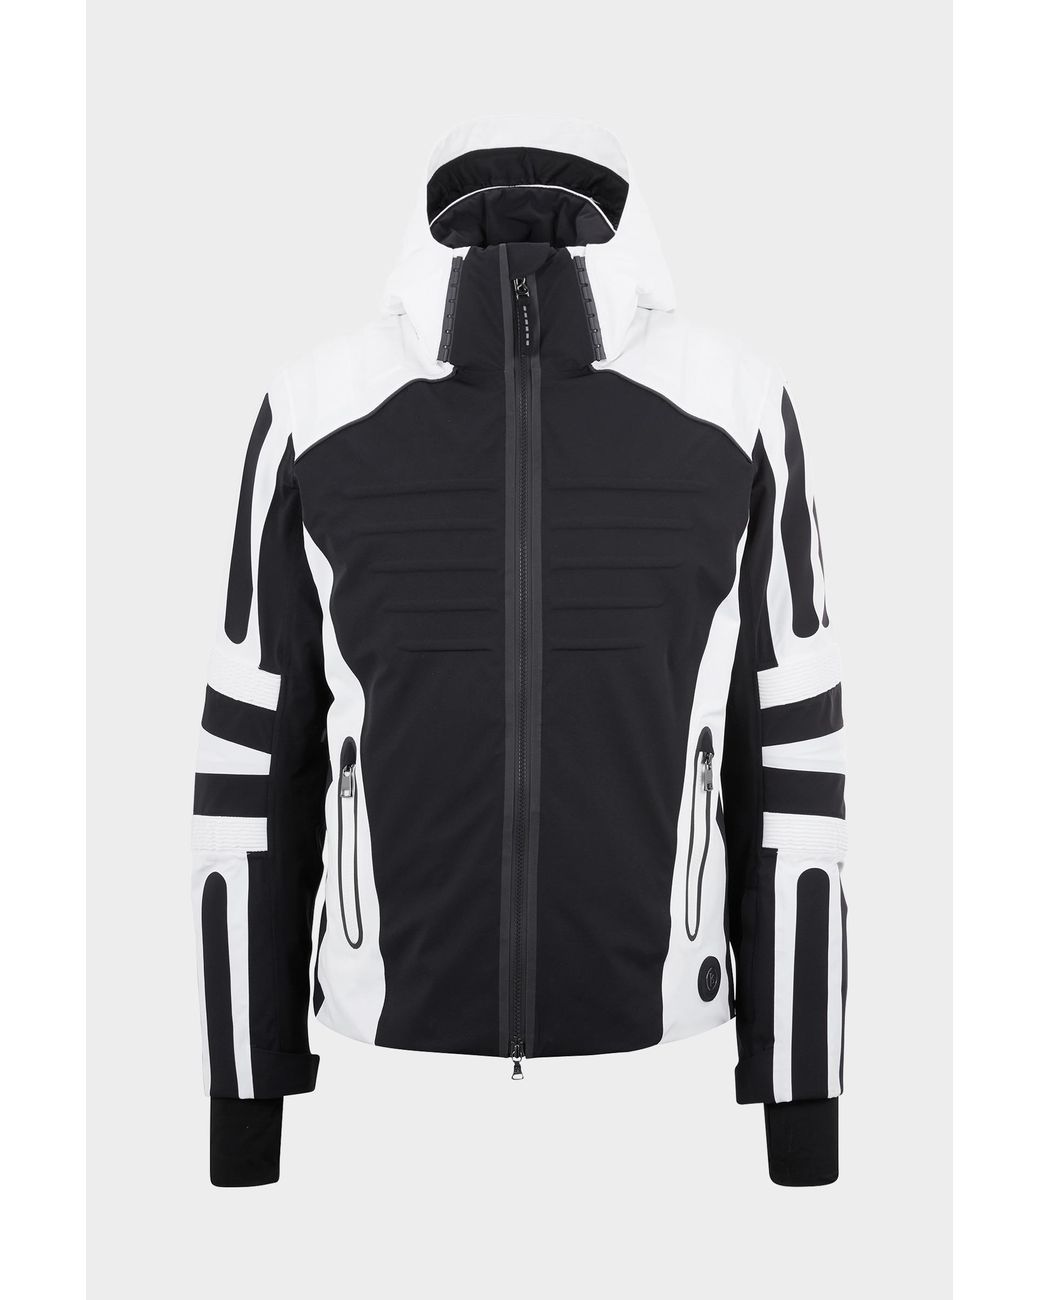 Bogner Kaleo Ski Jacket In Black/white for Men | Lyst Canada